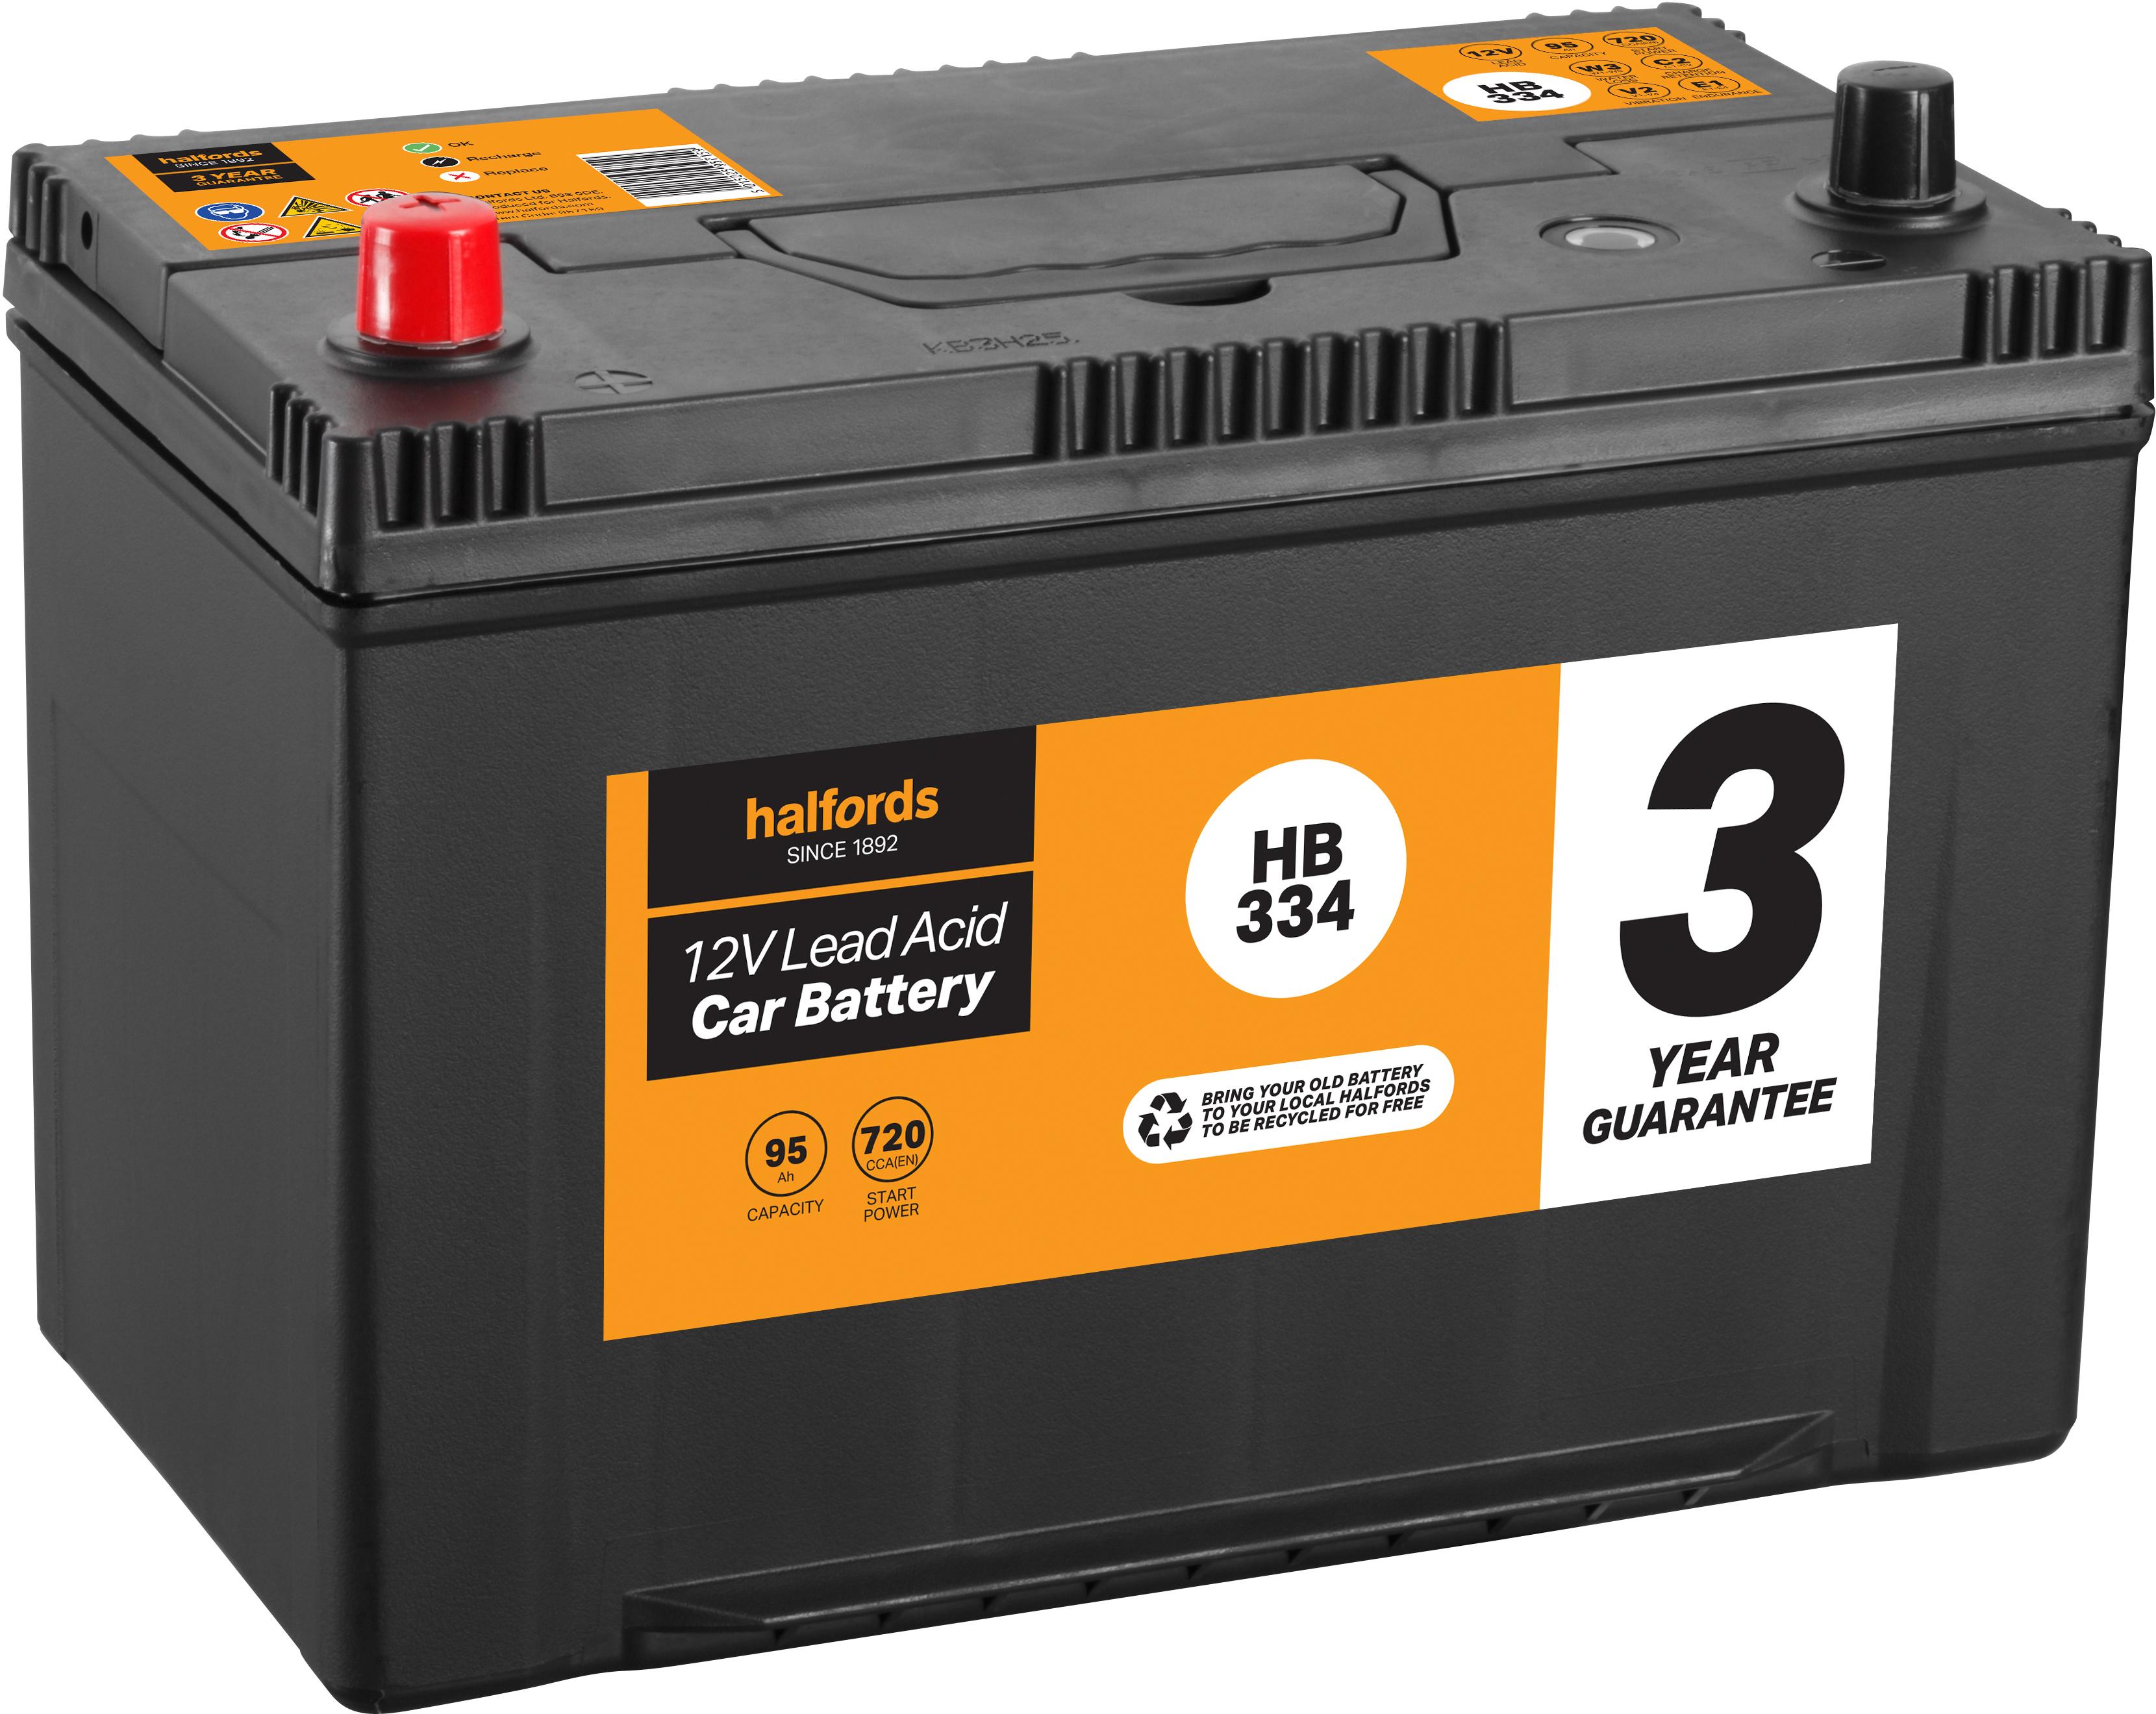 Halfords Hb334 Lead Acid 12V Car Battery 3 Year Guarantee